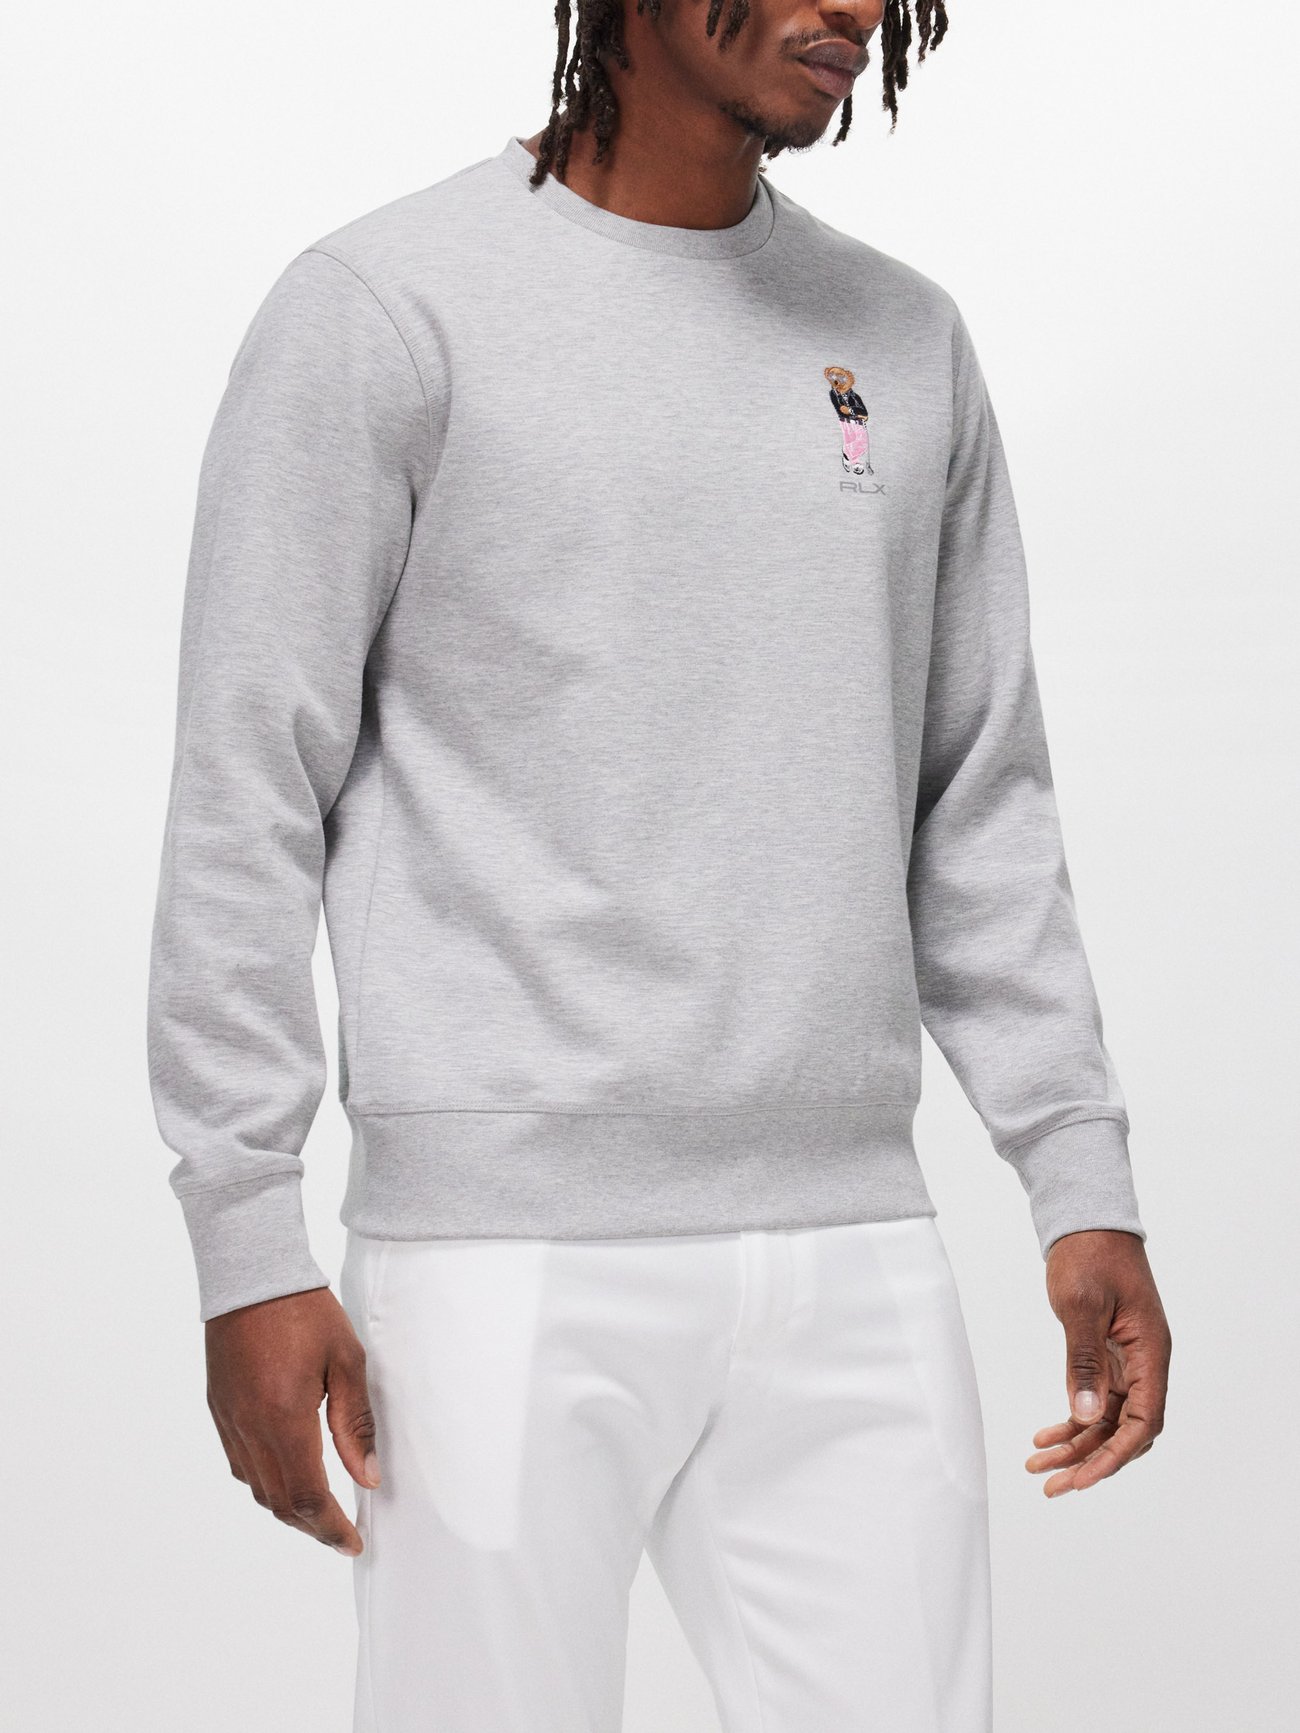 Polo Ralph Lauren Grey Polo Sweatsuit